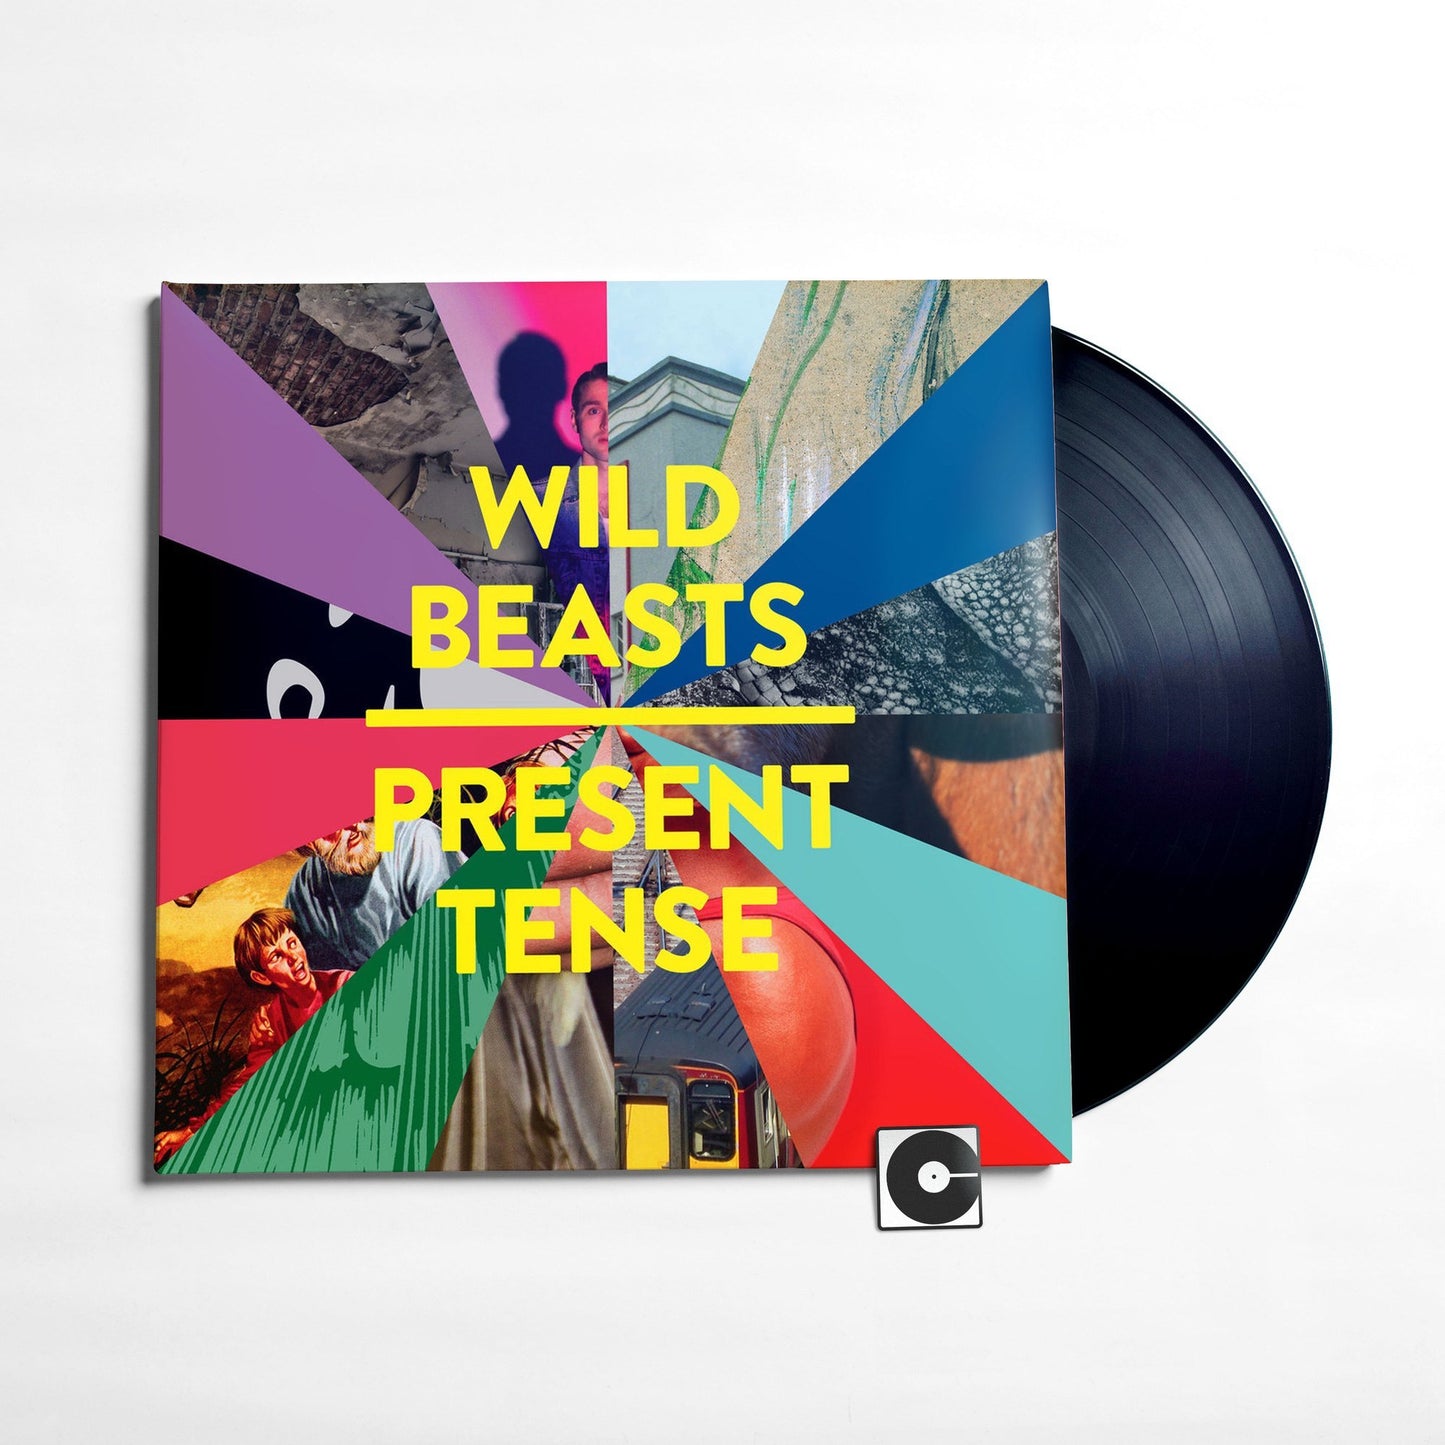 Wild Beasts - "Present Tense"